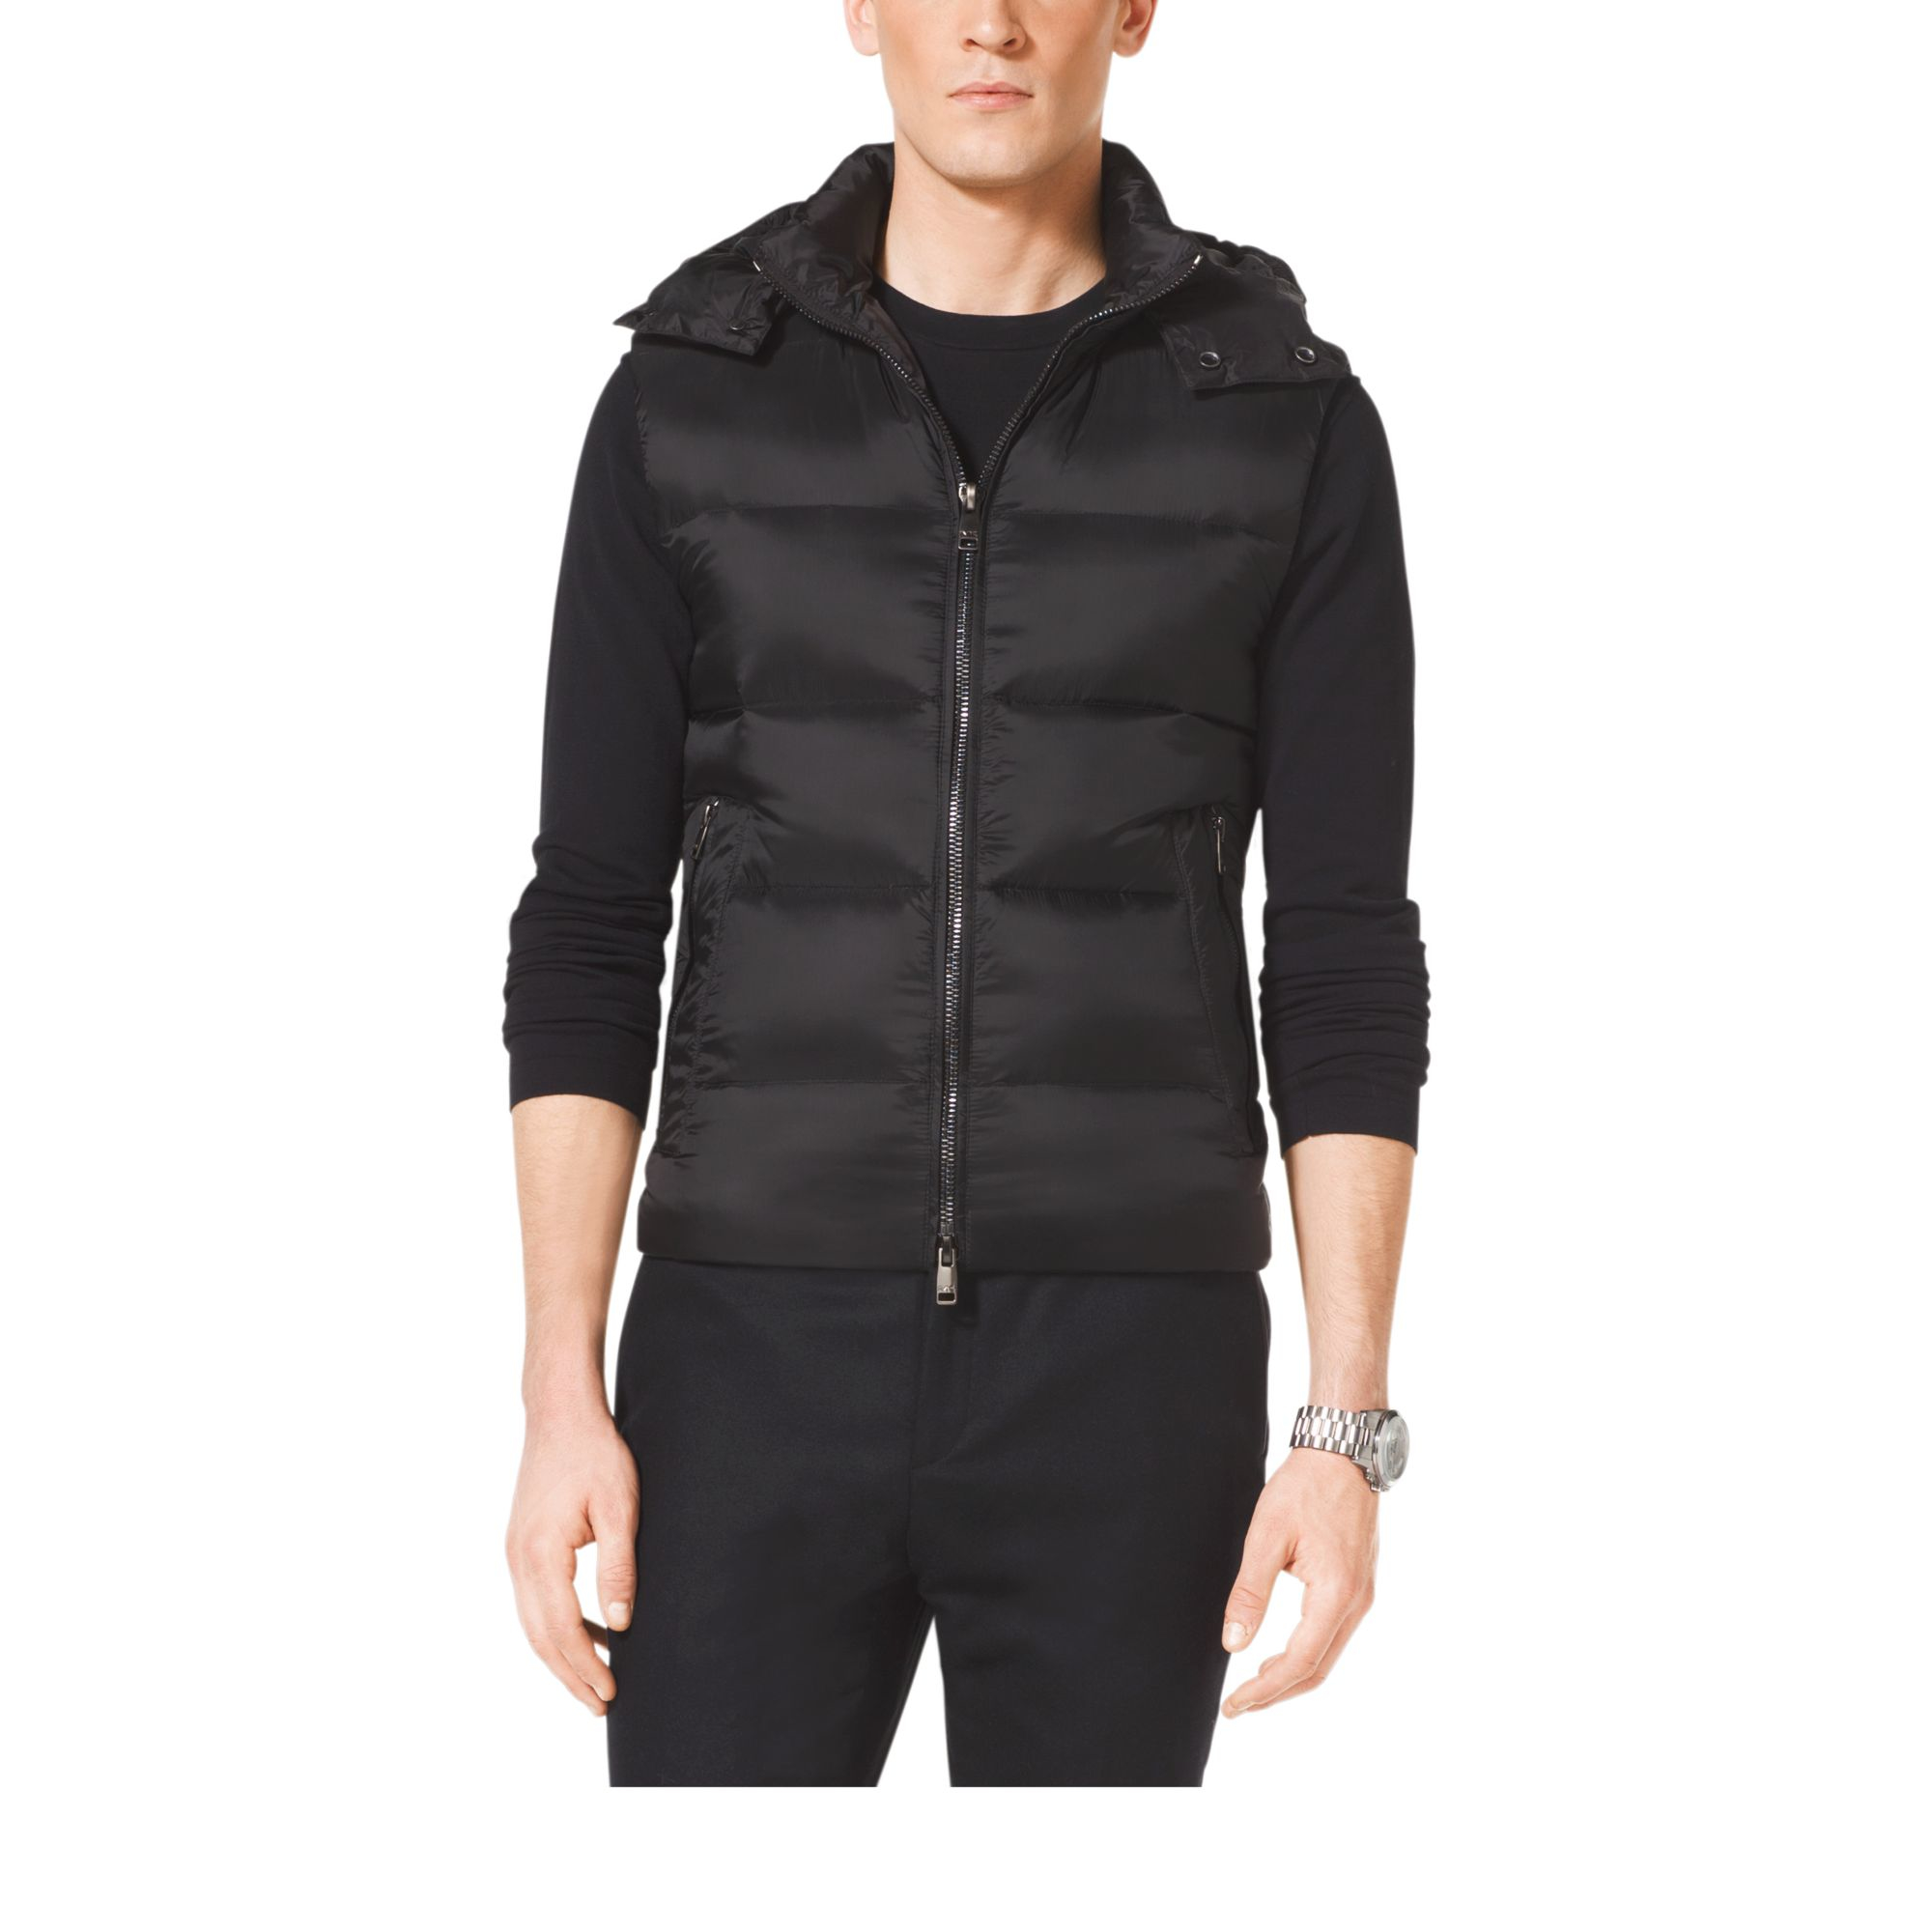 michael kors black hooded puffer vest product 2 714445254 normal